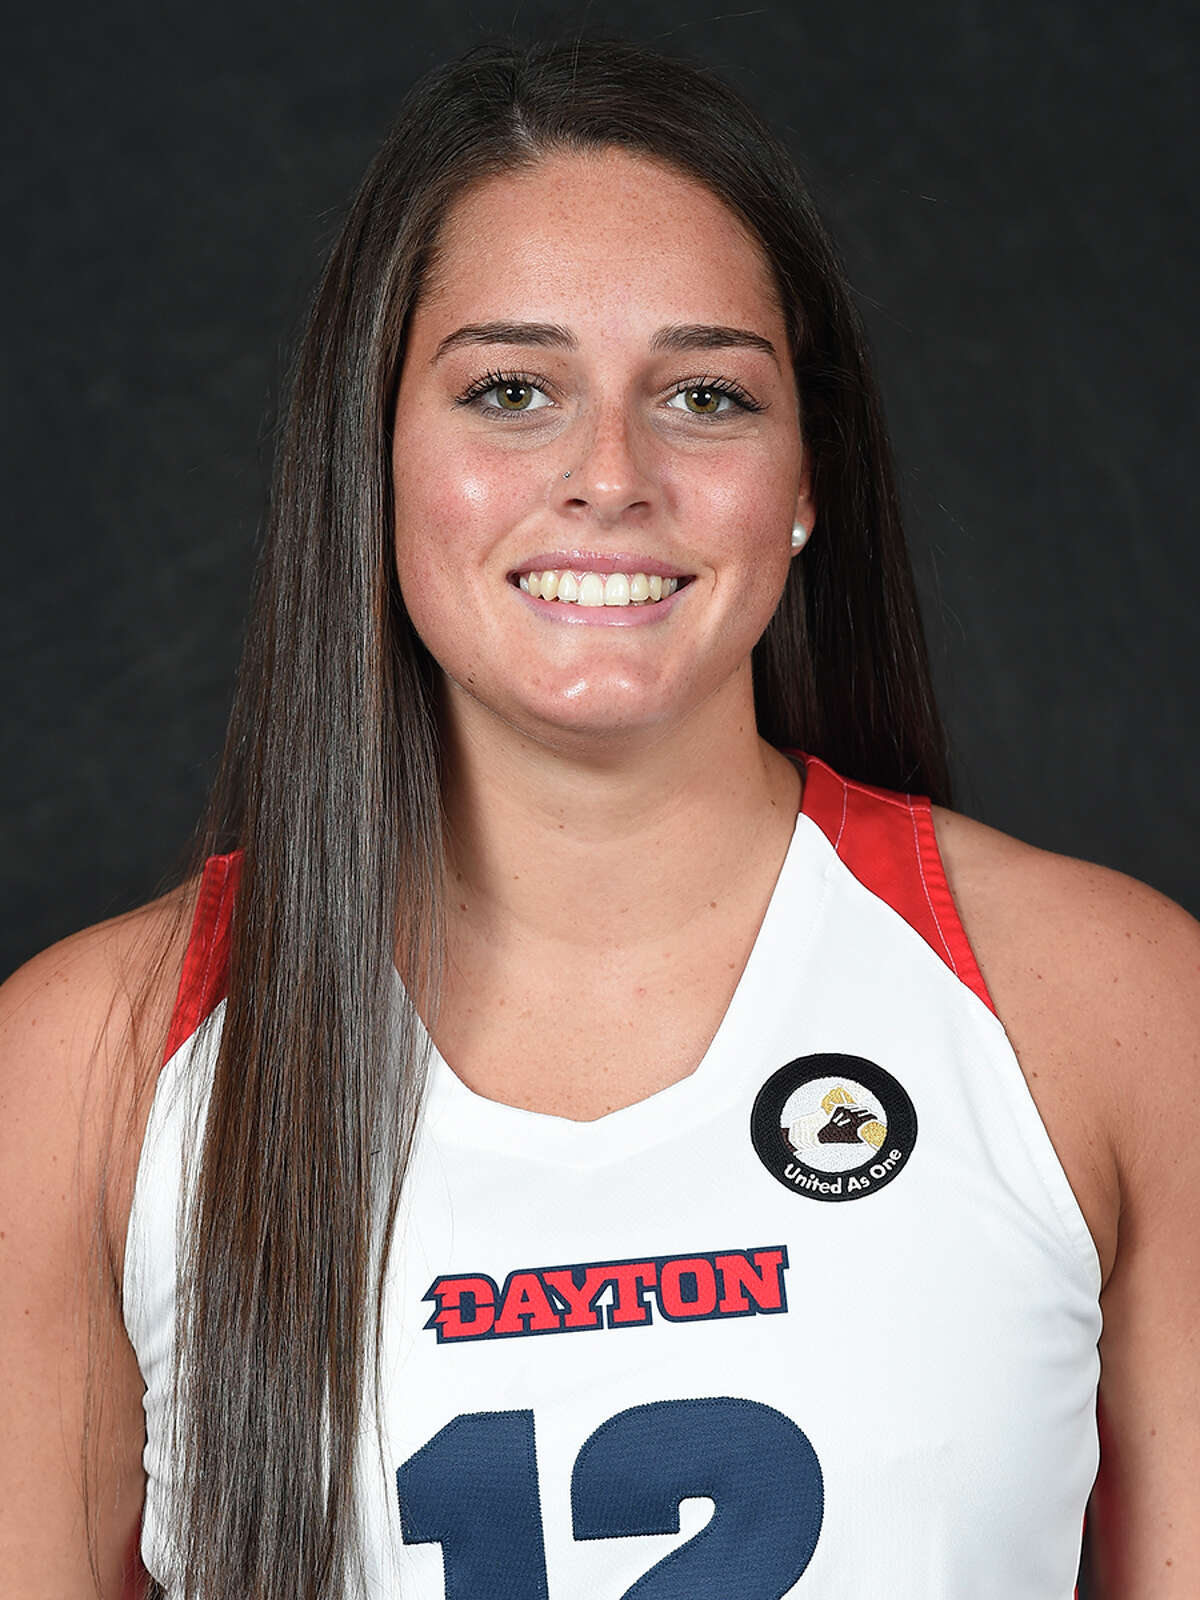 Bethlehem graduate Jenna Giacone of the Dayton women's basketball team.